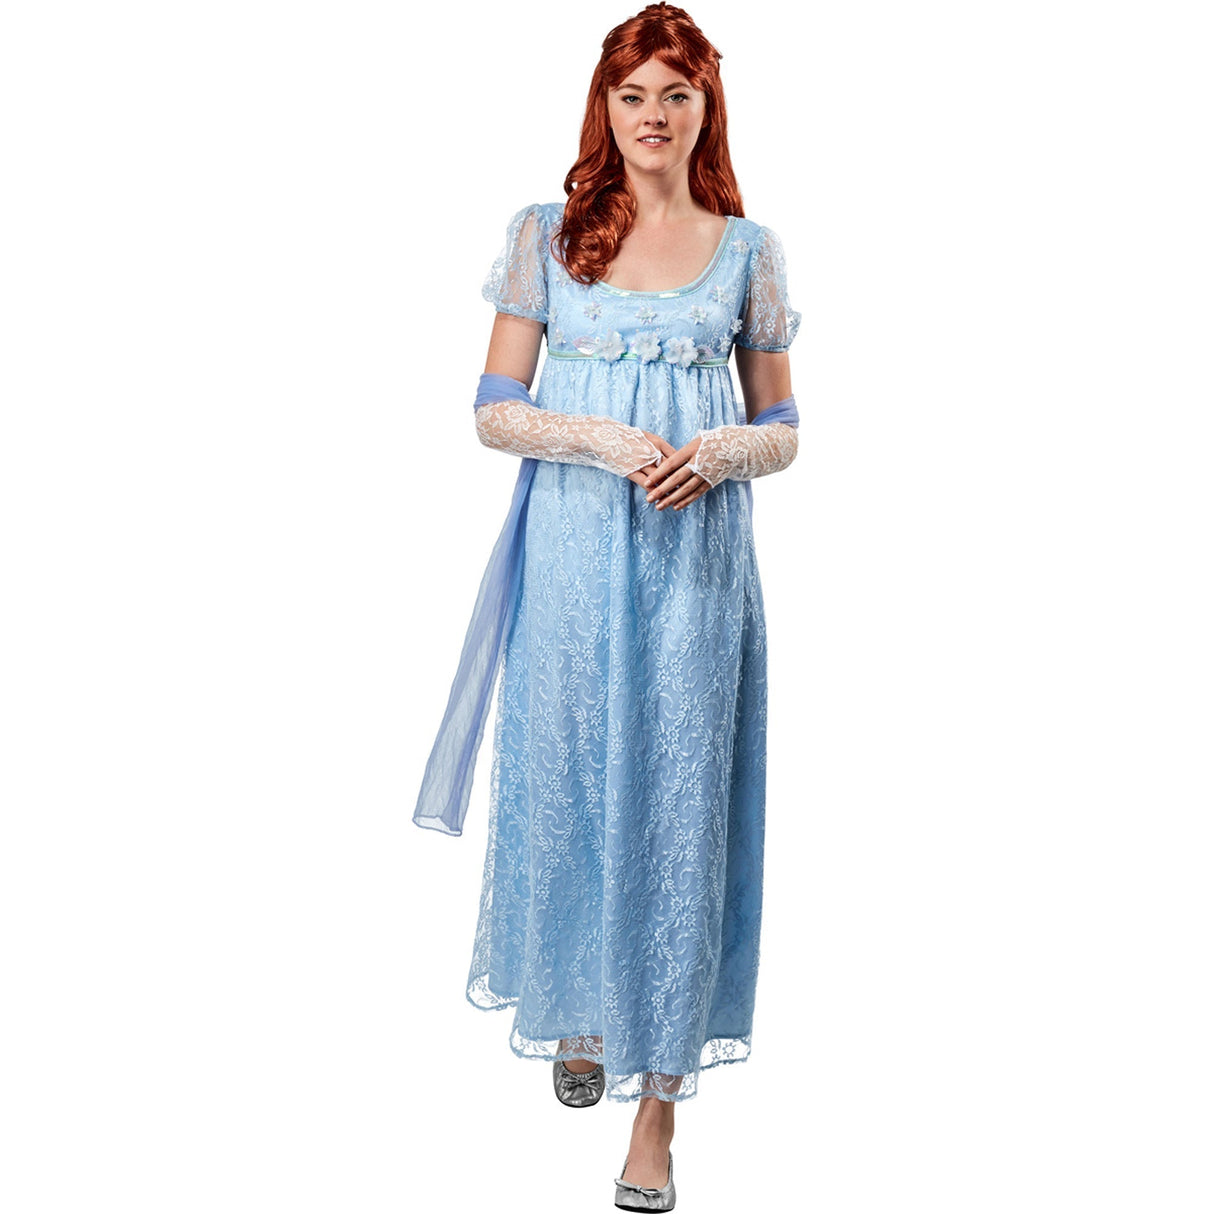 RUBIES II (Ruby Slipper Sales) Costumes Bridgerton Blue Lace Dress Costume for Adults